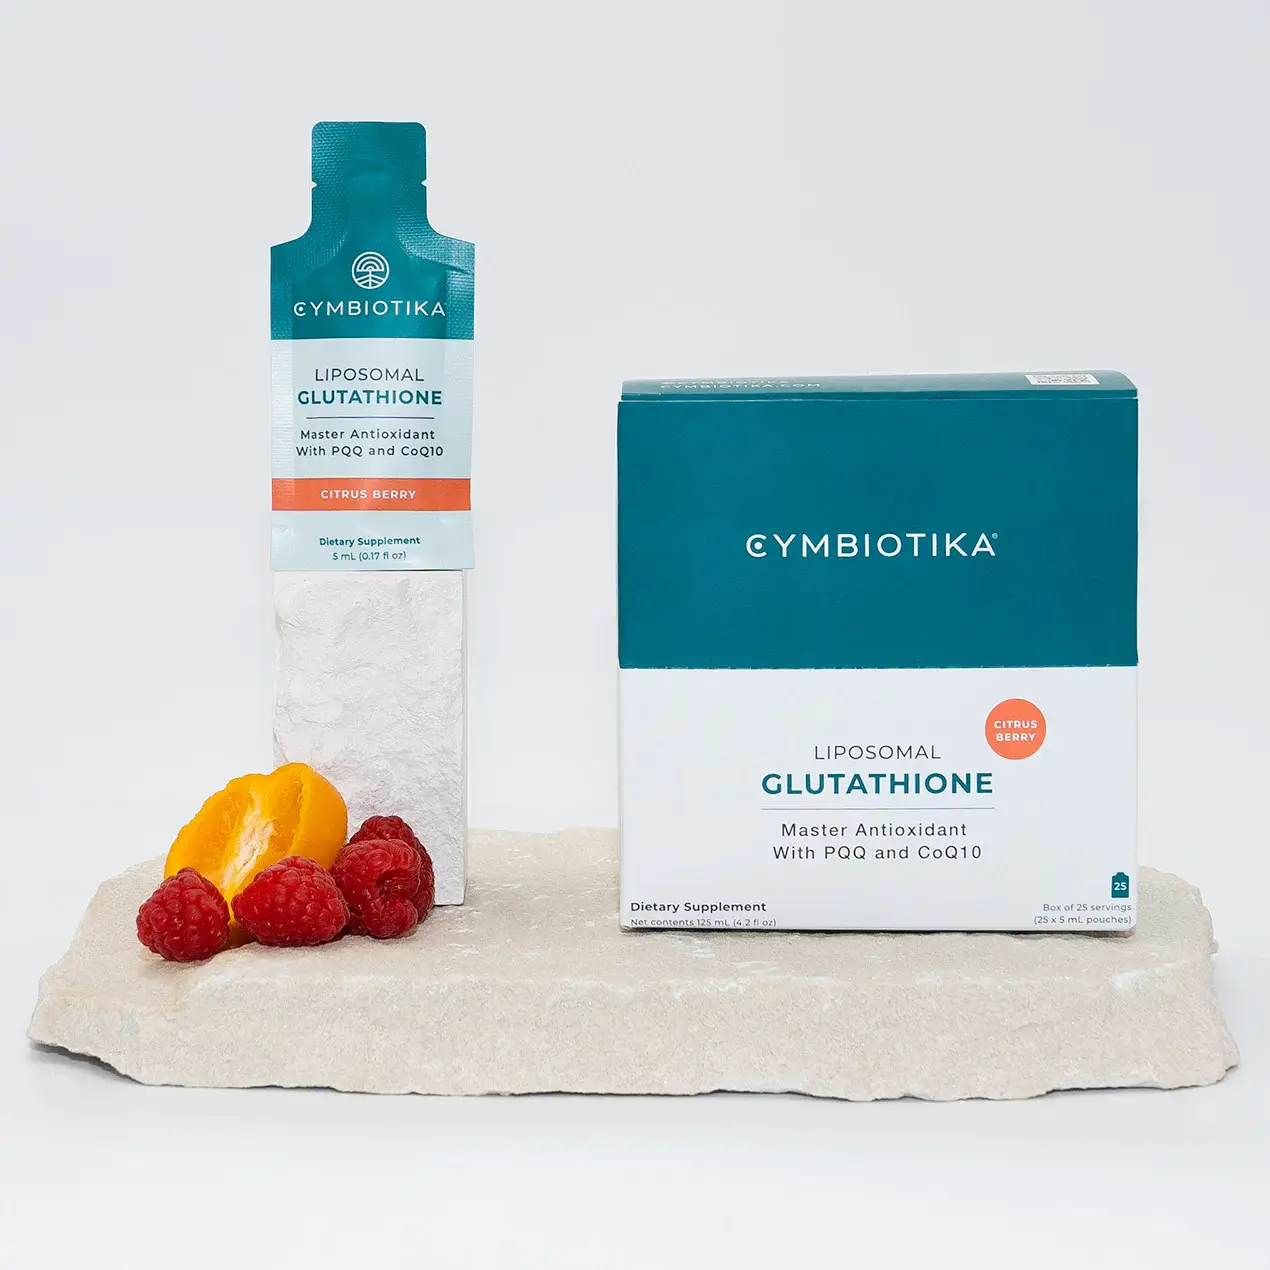 Liposomal Glutathione Delivery